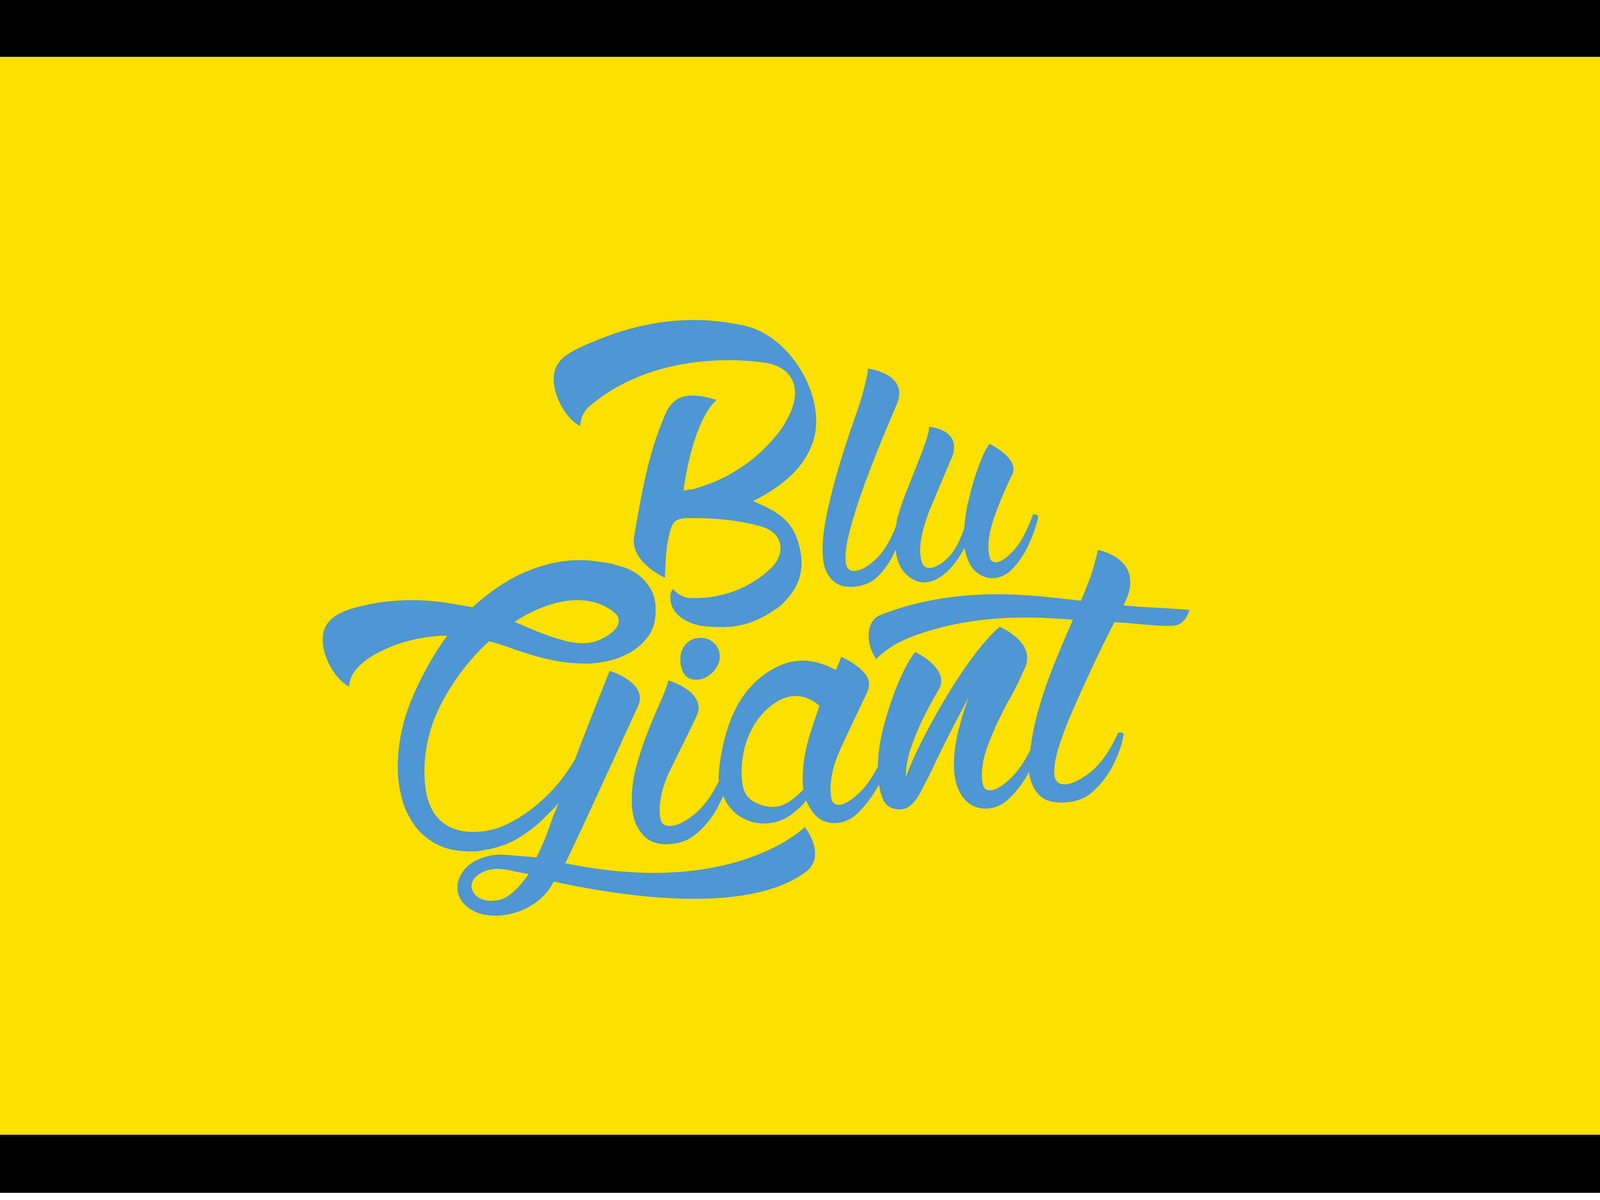 BluGiant Logo by Jessica Norton on Dribbble